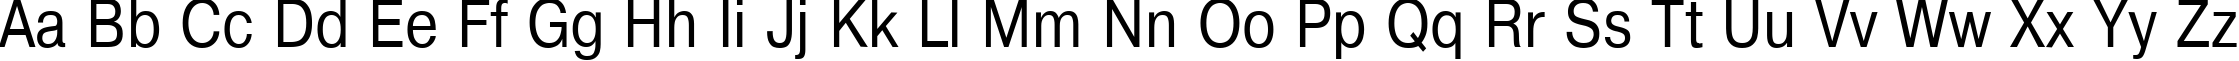 Пример написания английского алфавита шрифтом NTHarmonica Normal85n